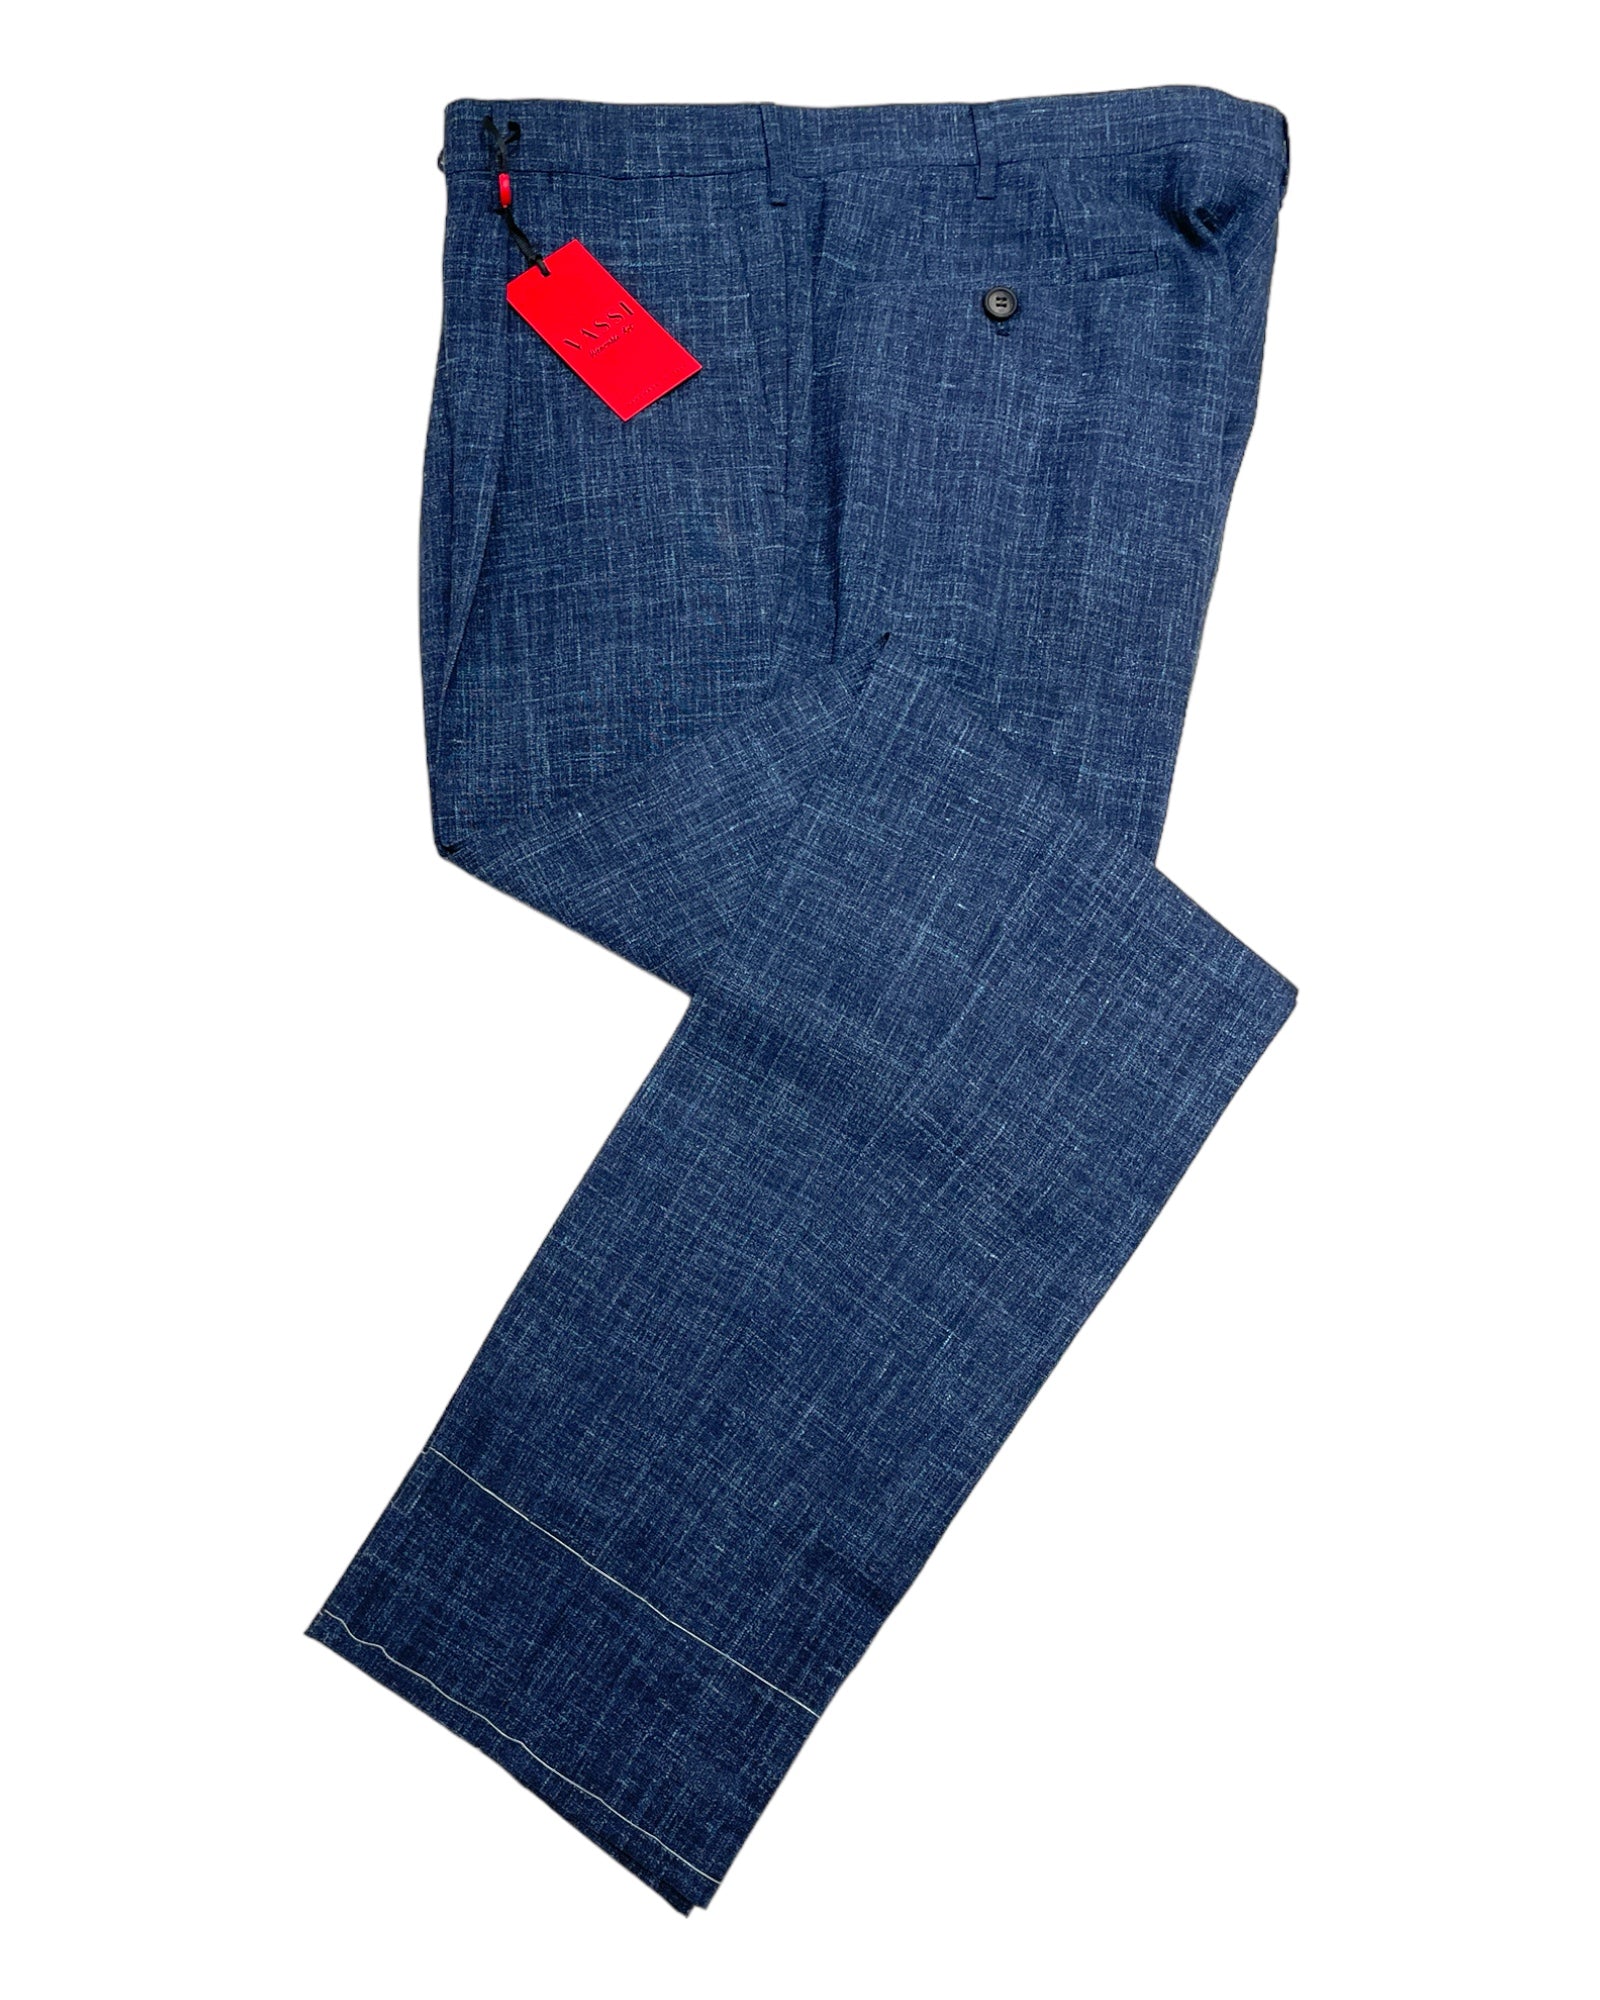 VASSI One Pleated Sartorial Trousers - Blue Loro Piana wool silk linen DRESS PANTS50 EU